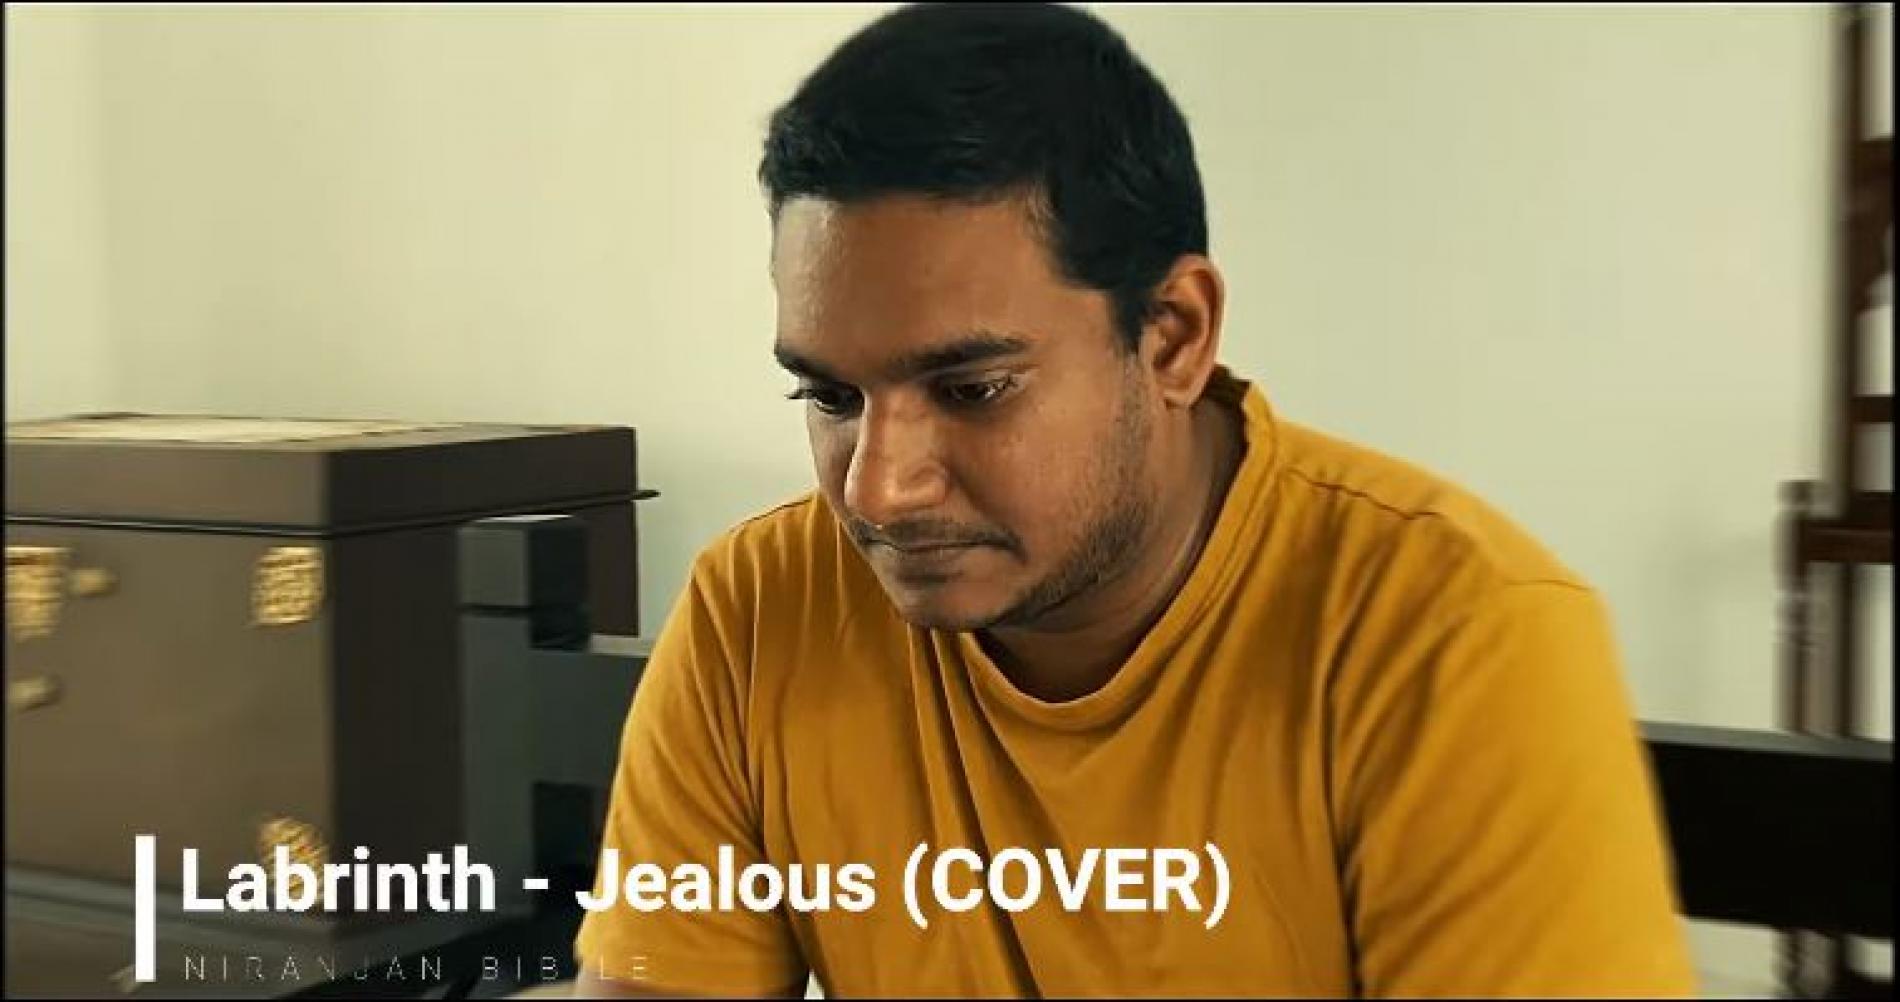 New Music : Labrinth – Jealous (Cover) by Niranjan Bibile